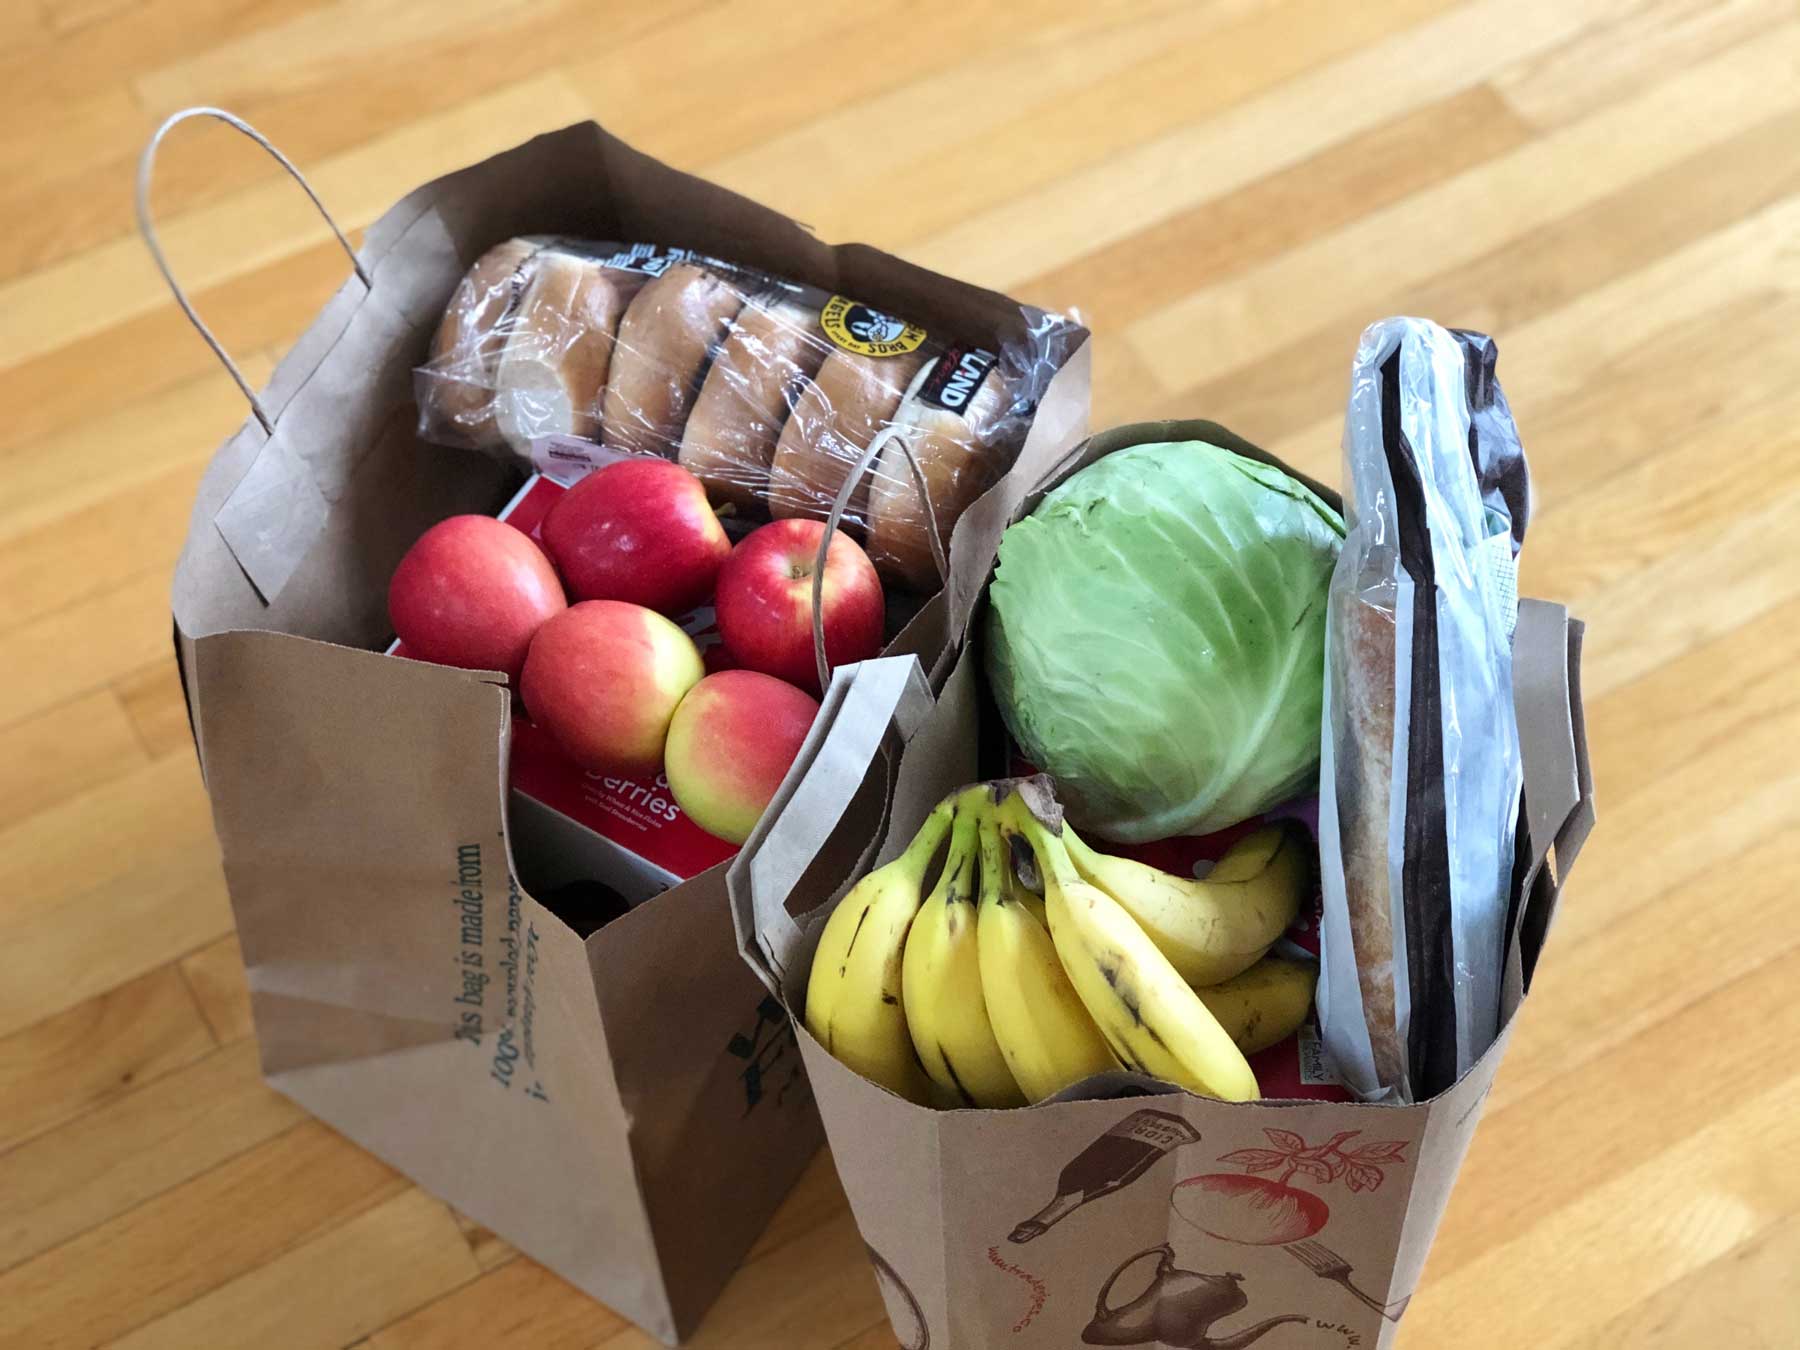 Bags of healthy groceries